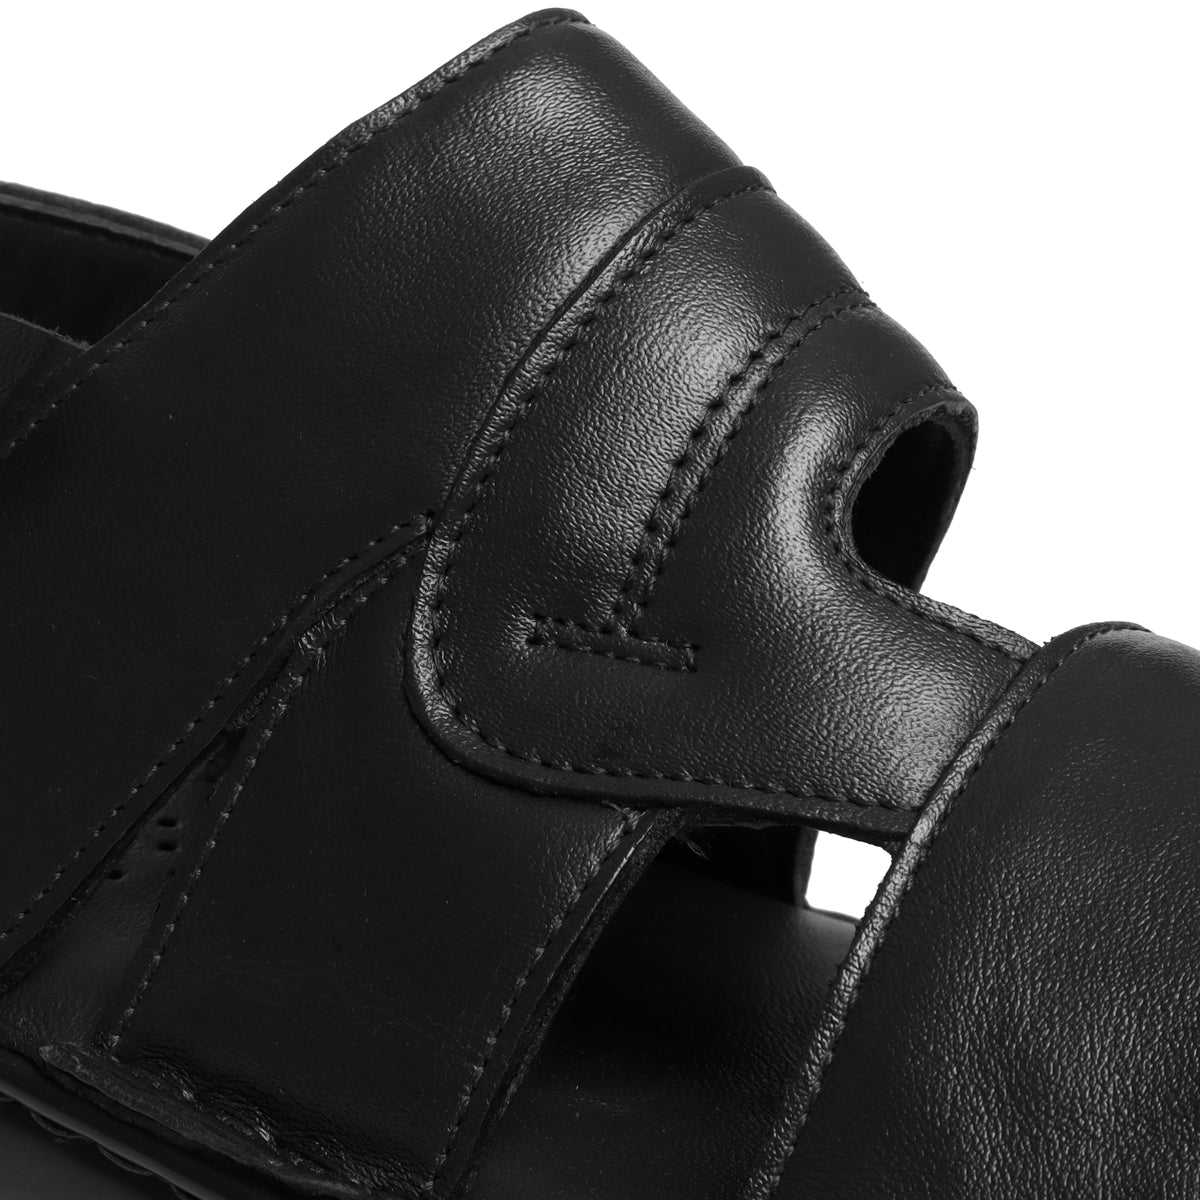 Buy Camel Brown Sandals for Men by WOODLAND Online | Ajio.com